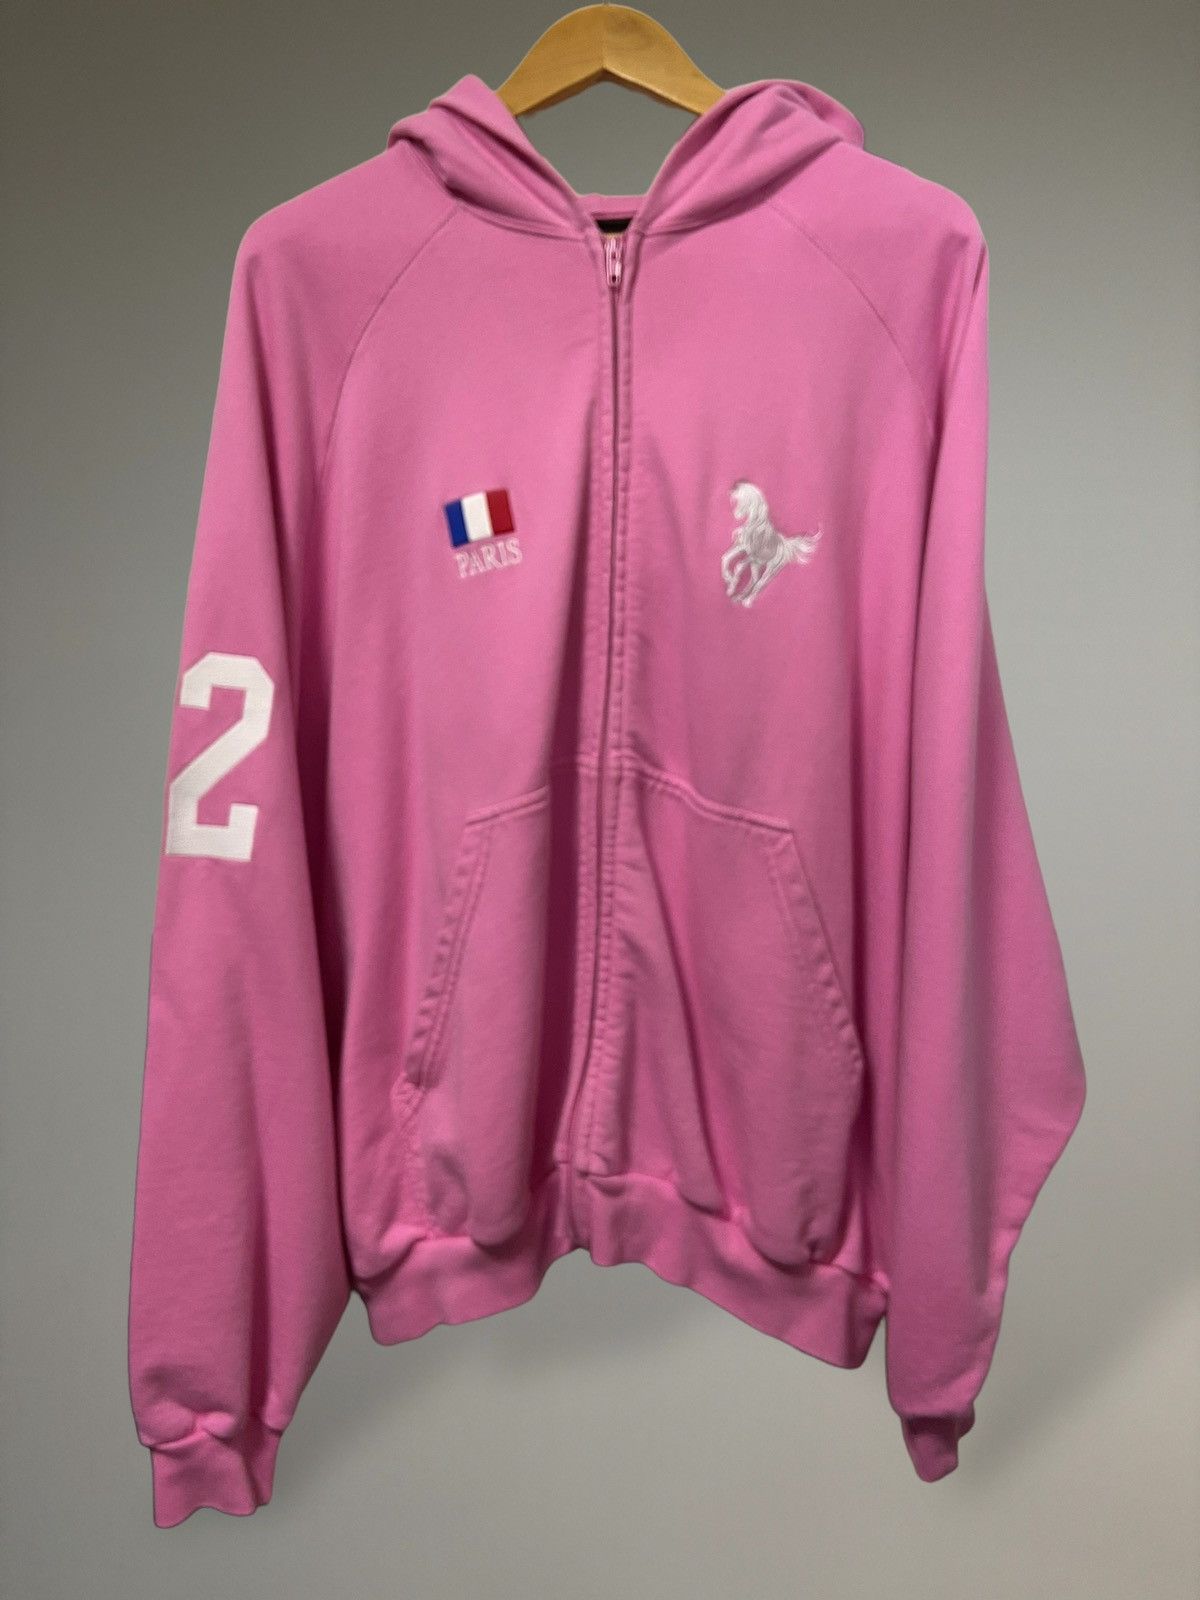 Balenciaga Zip Hoodie Pink | Grailed